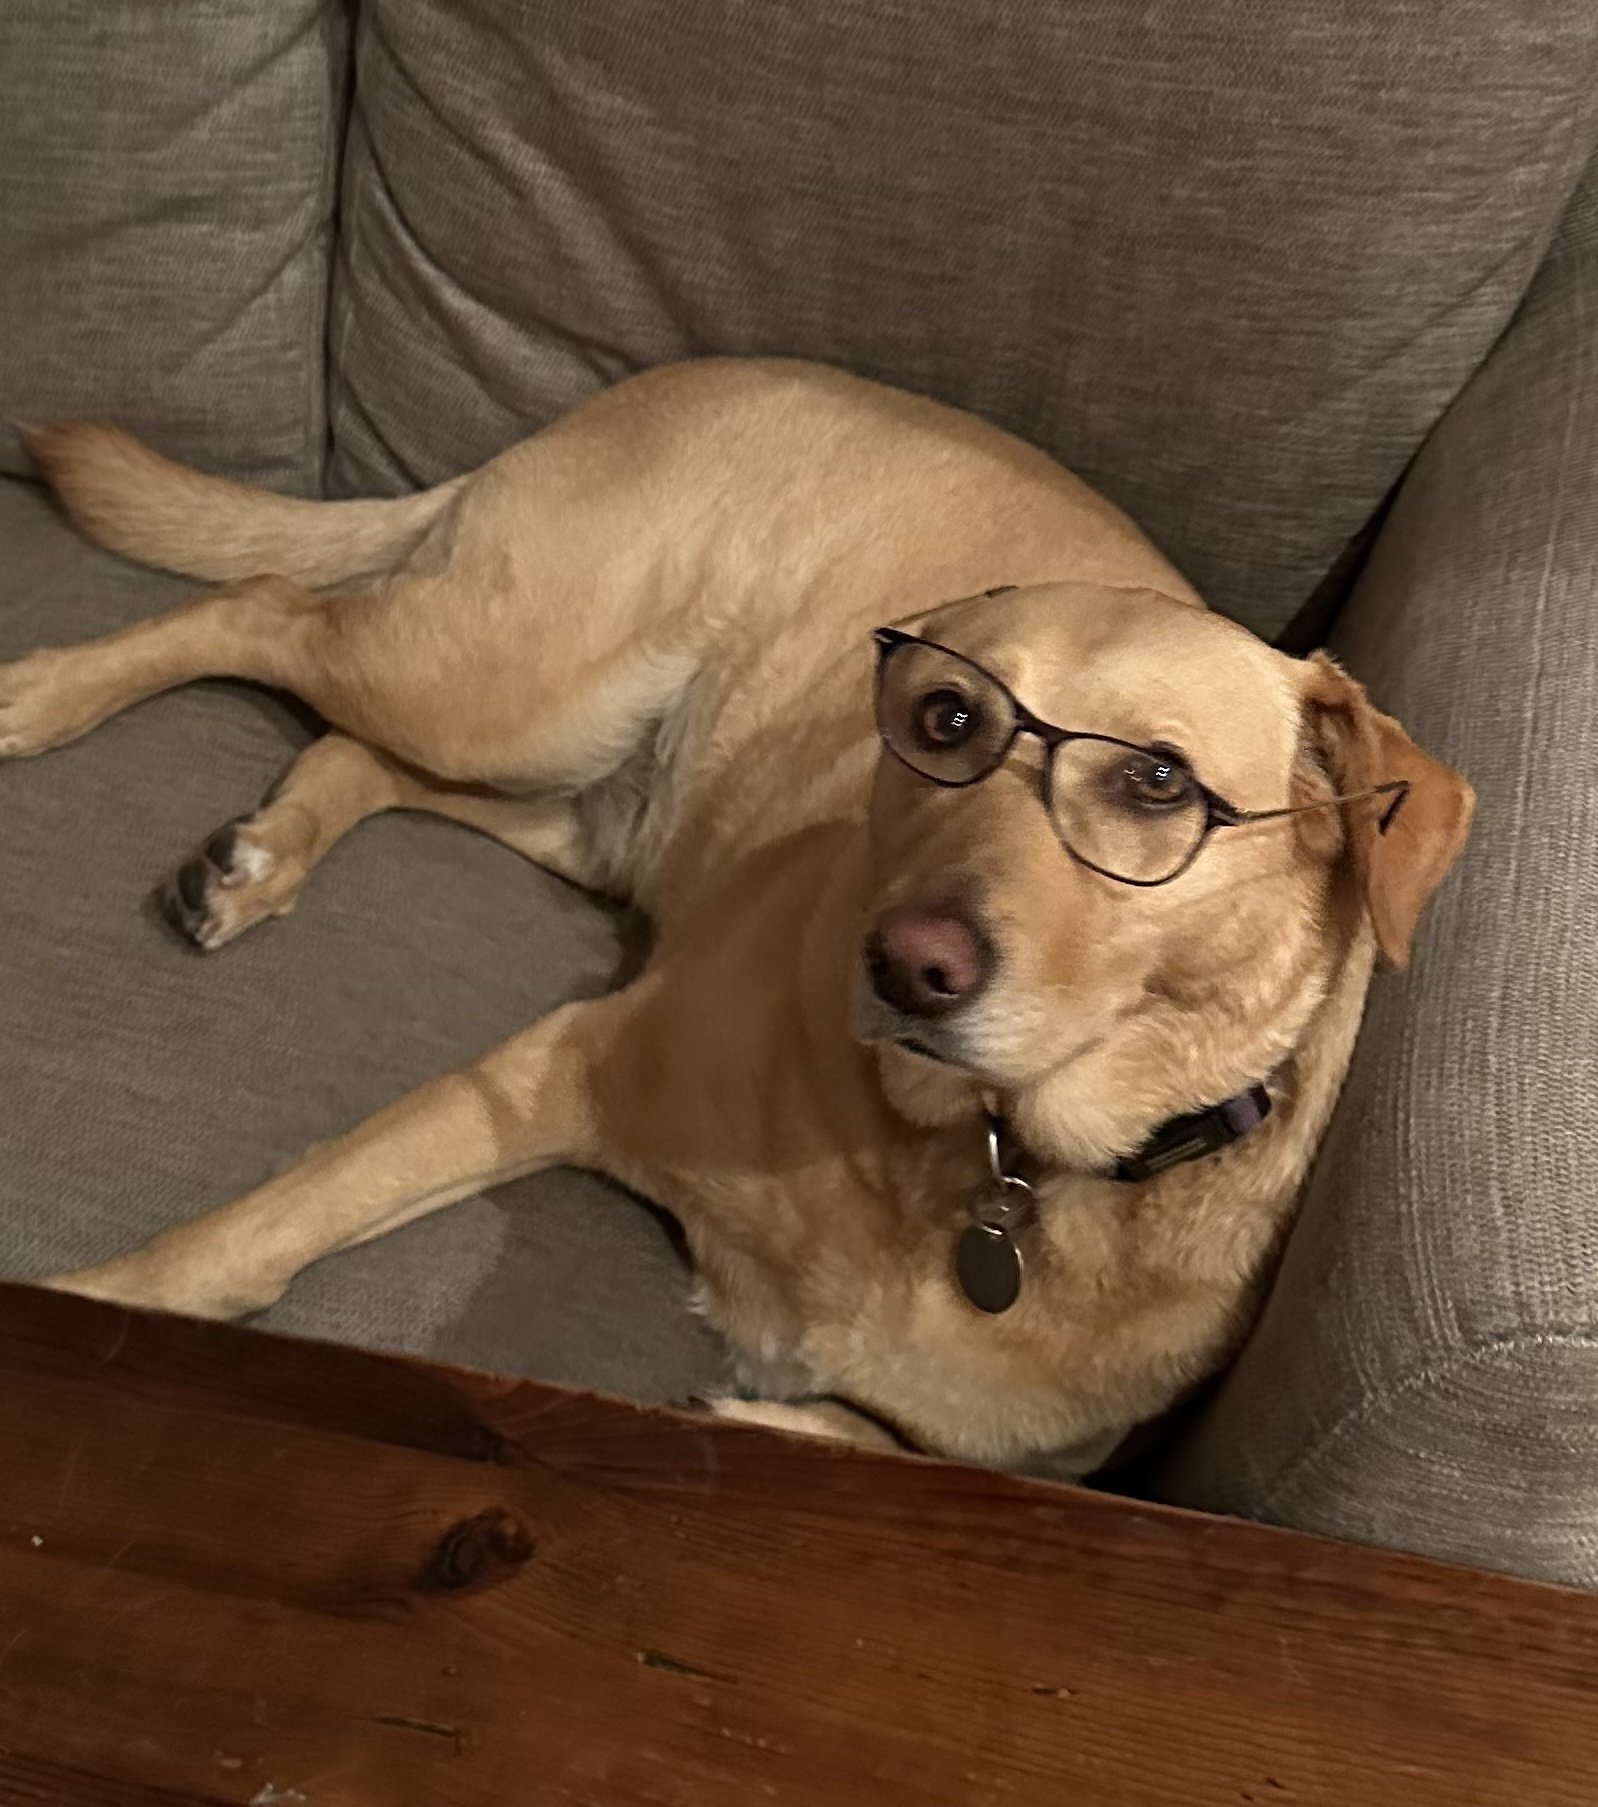 Lola the dog wearing glasses